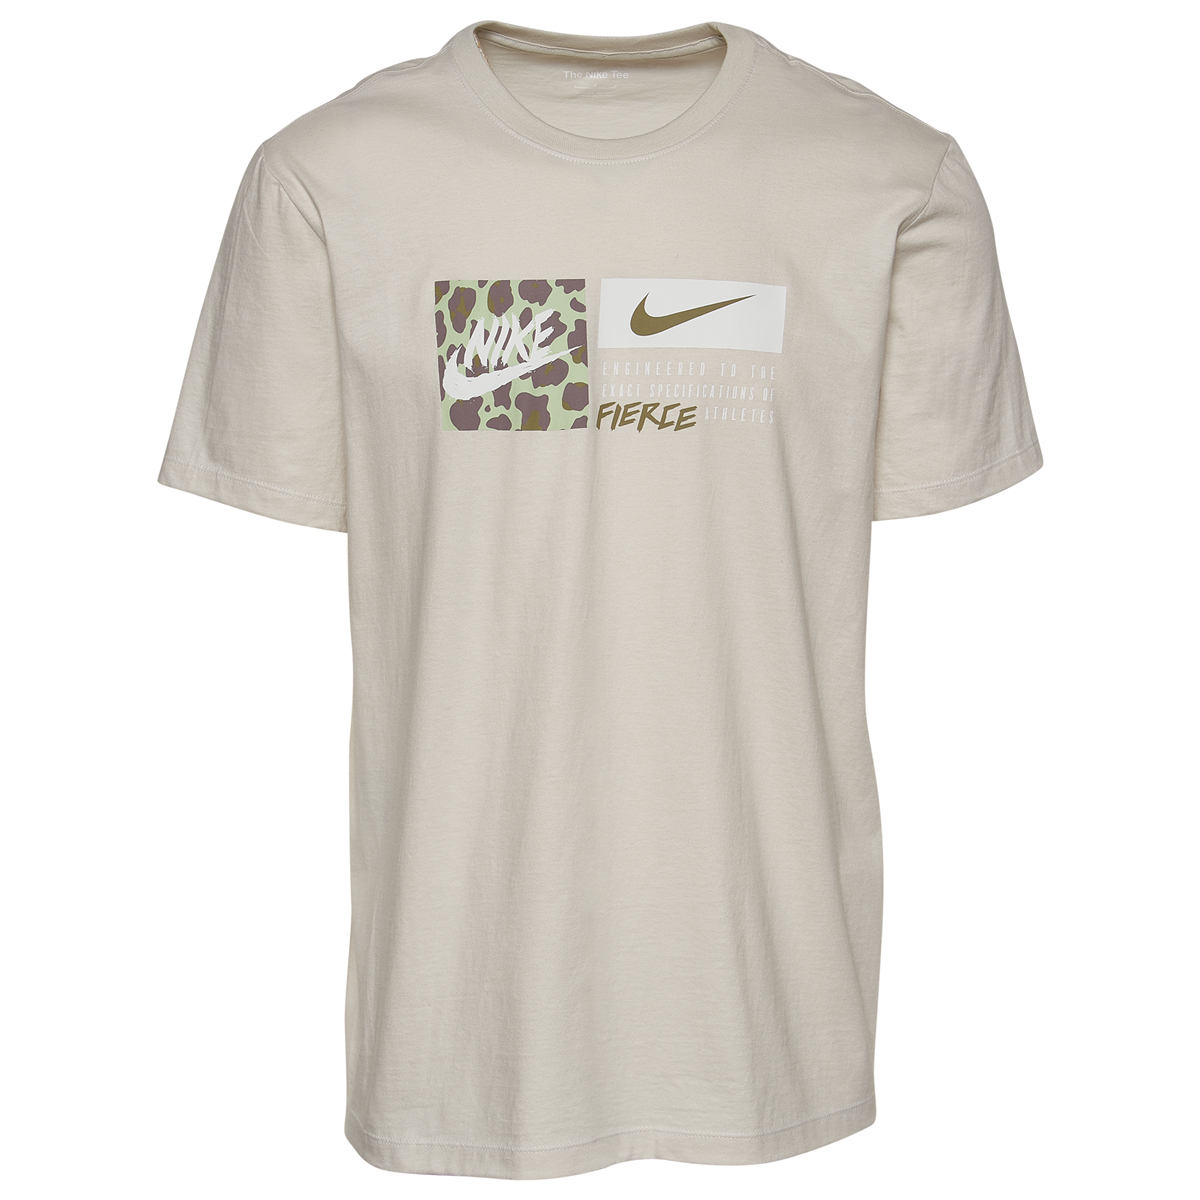 Nike-Tunnel-Walk-T-Shirt-Beige